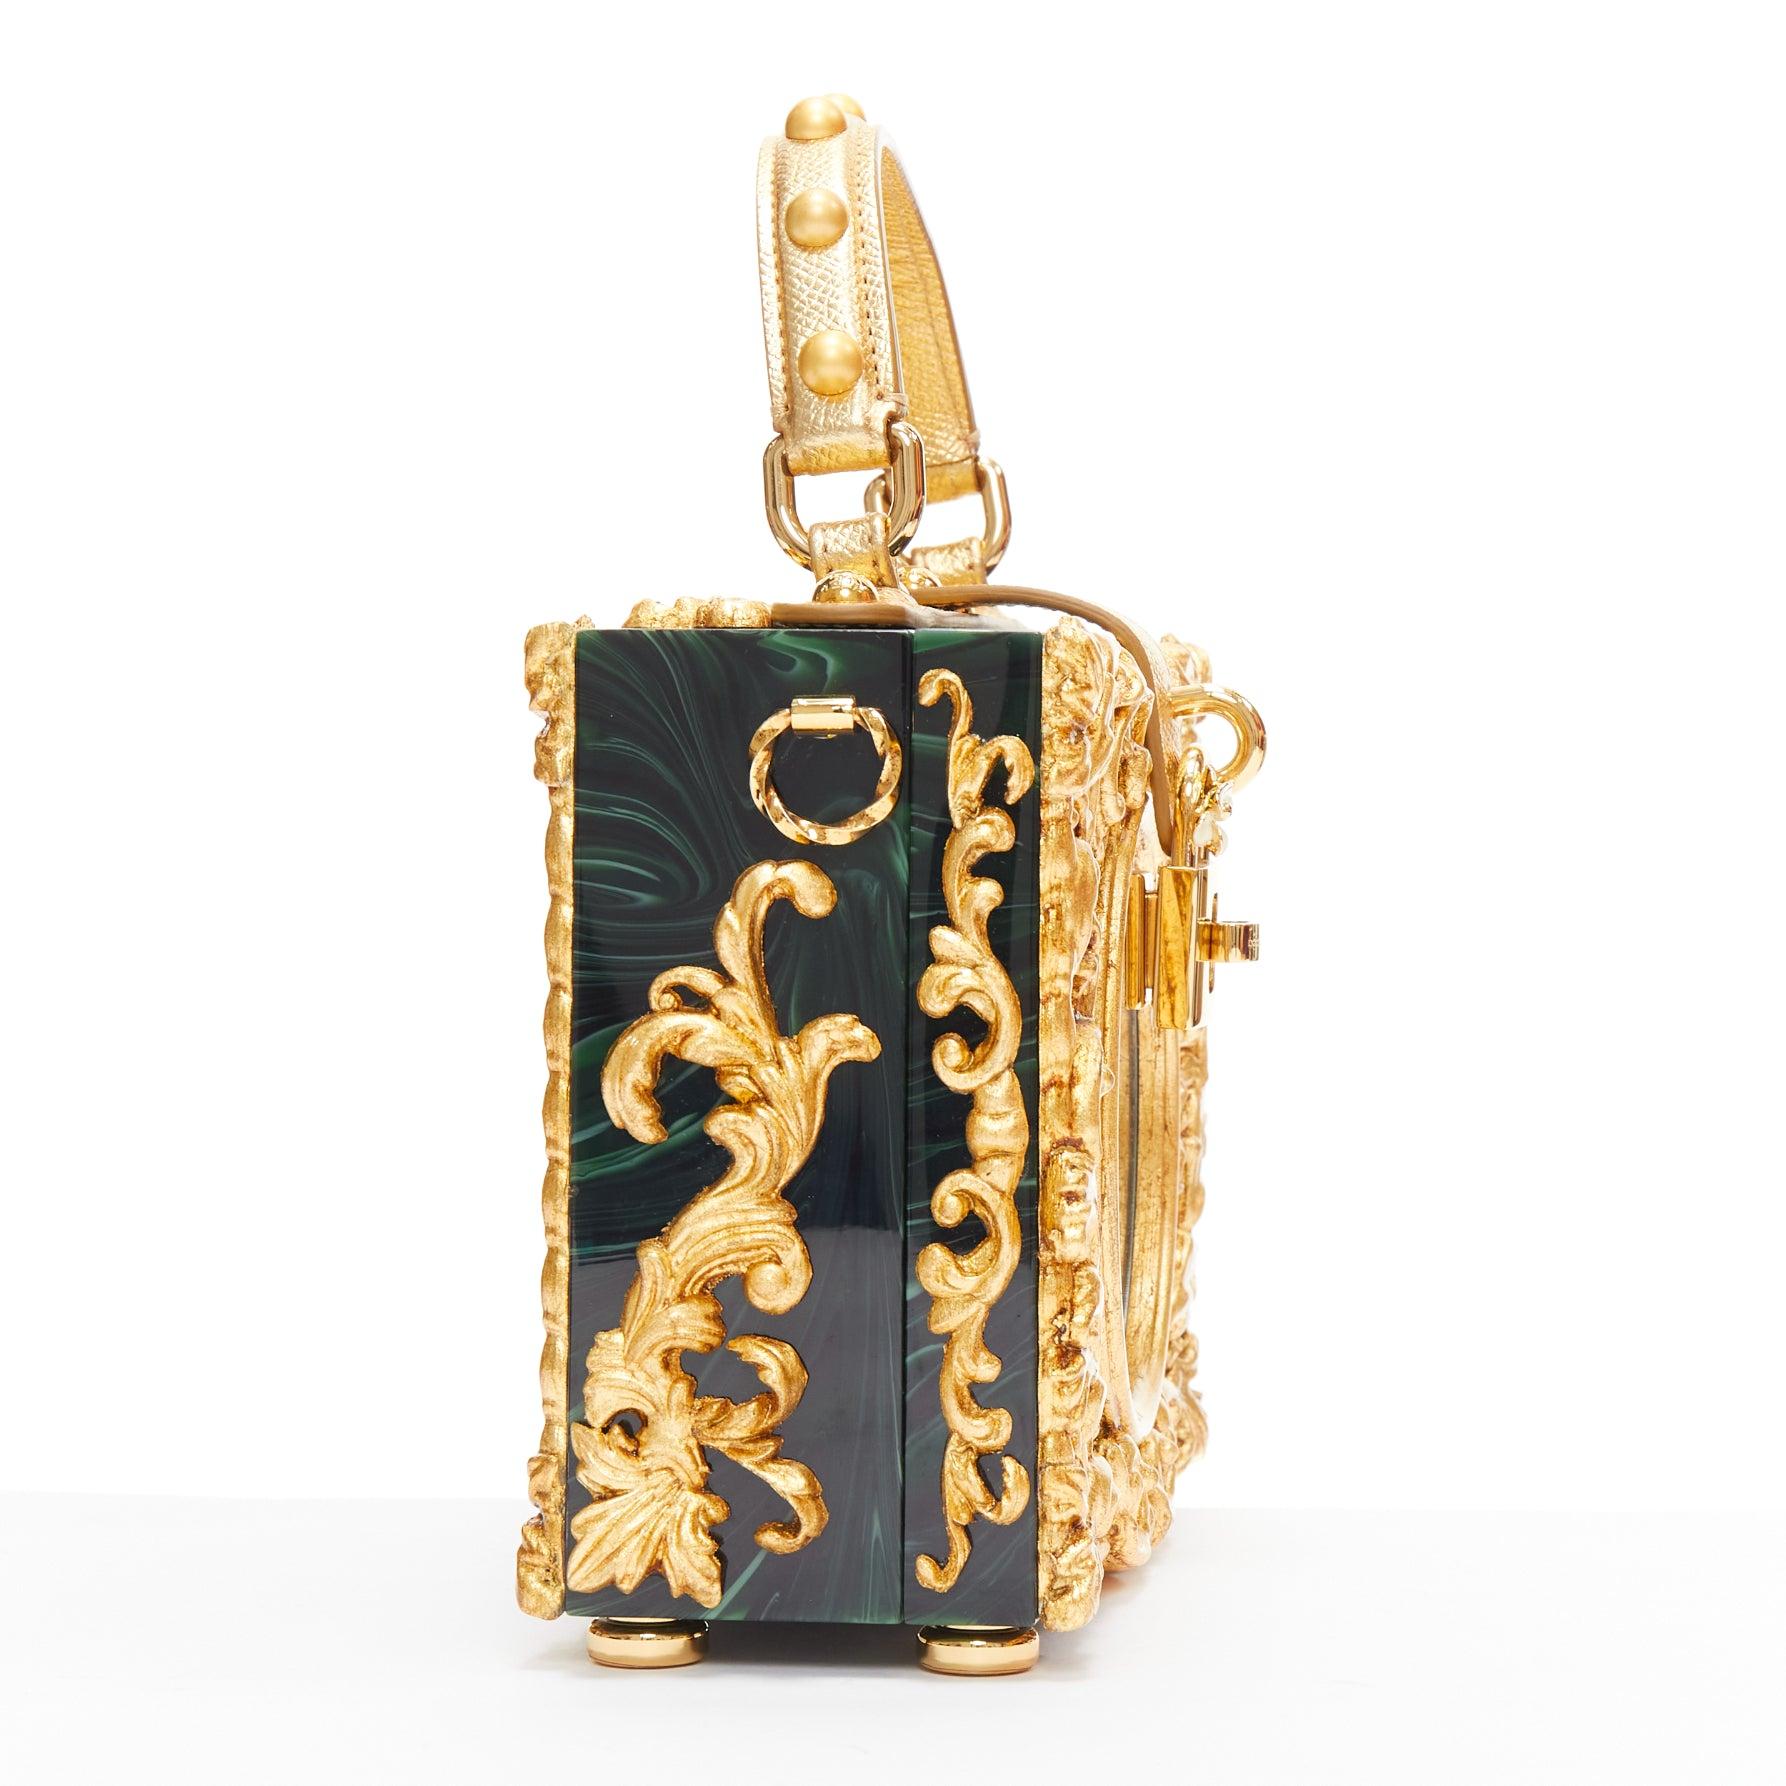 Women's rare DOLCE GABBANA Box Orologio Barocco gold metal green marble resin vanity bag For Sale